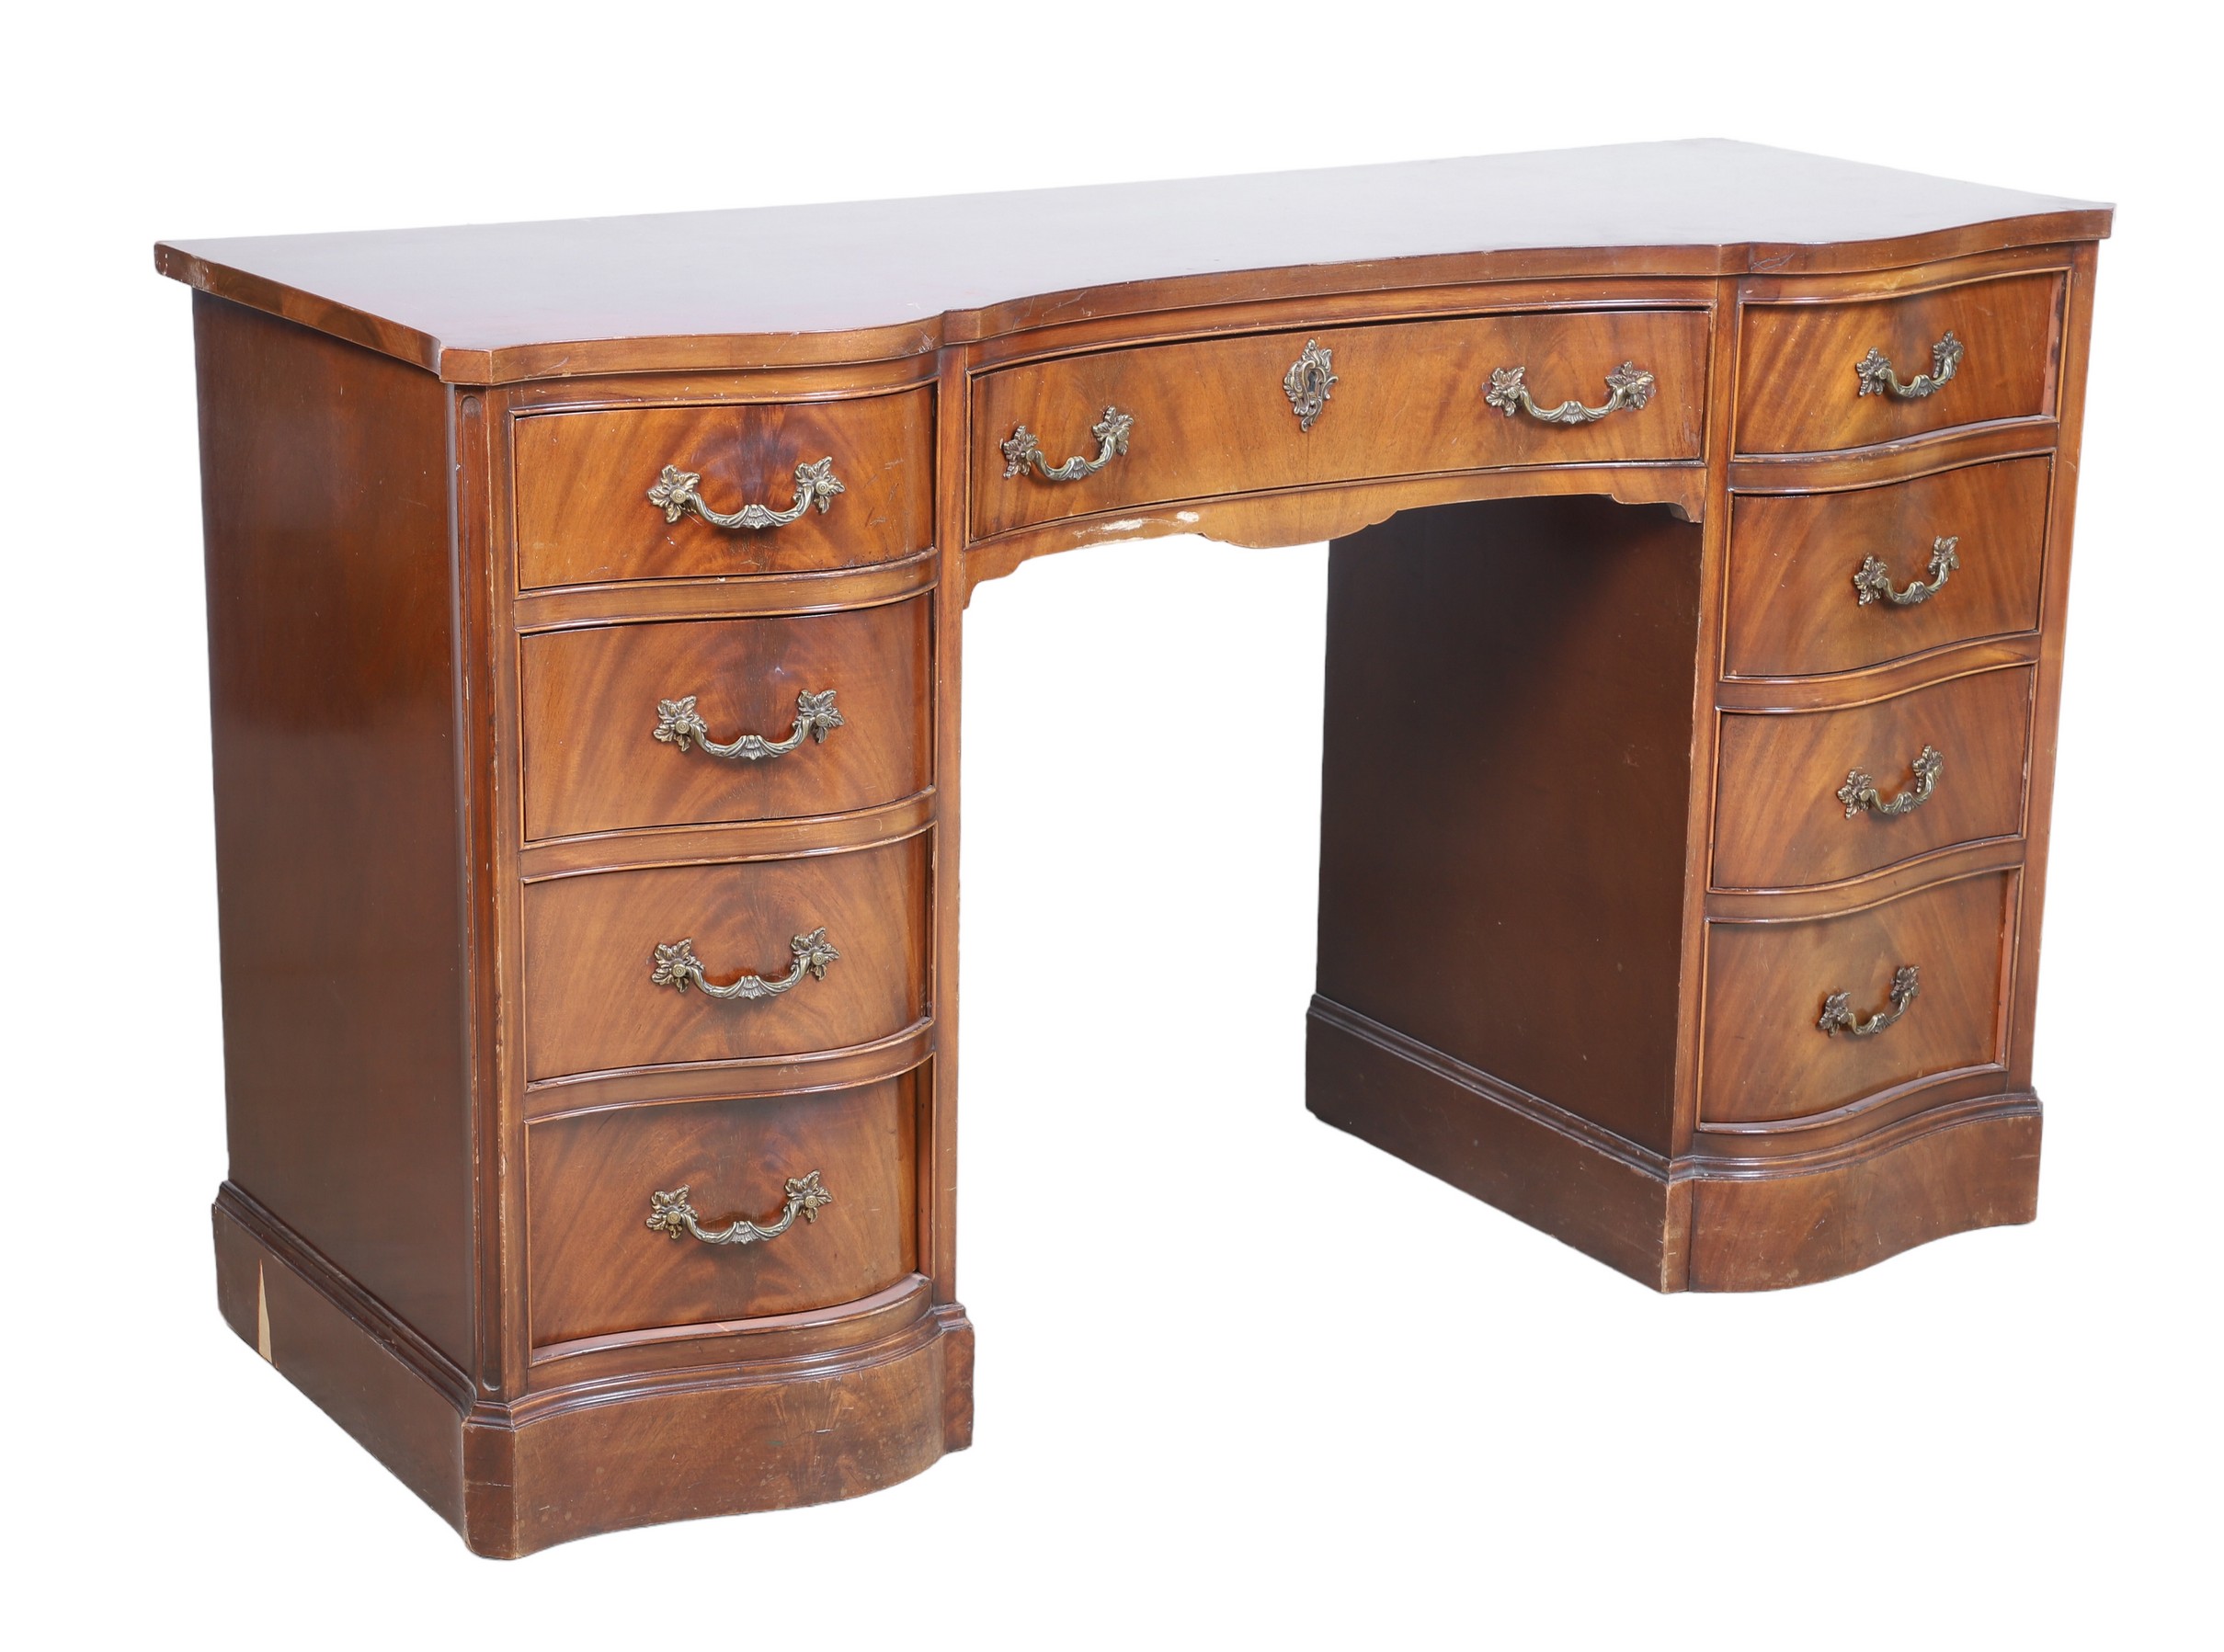 Mahogany serpentine desk, center drawer